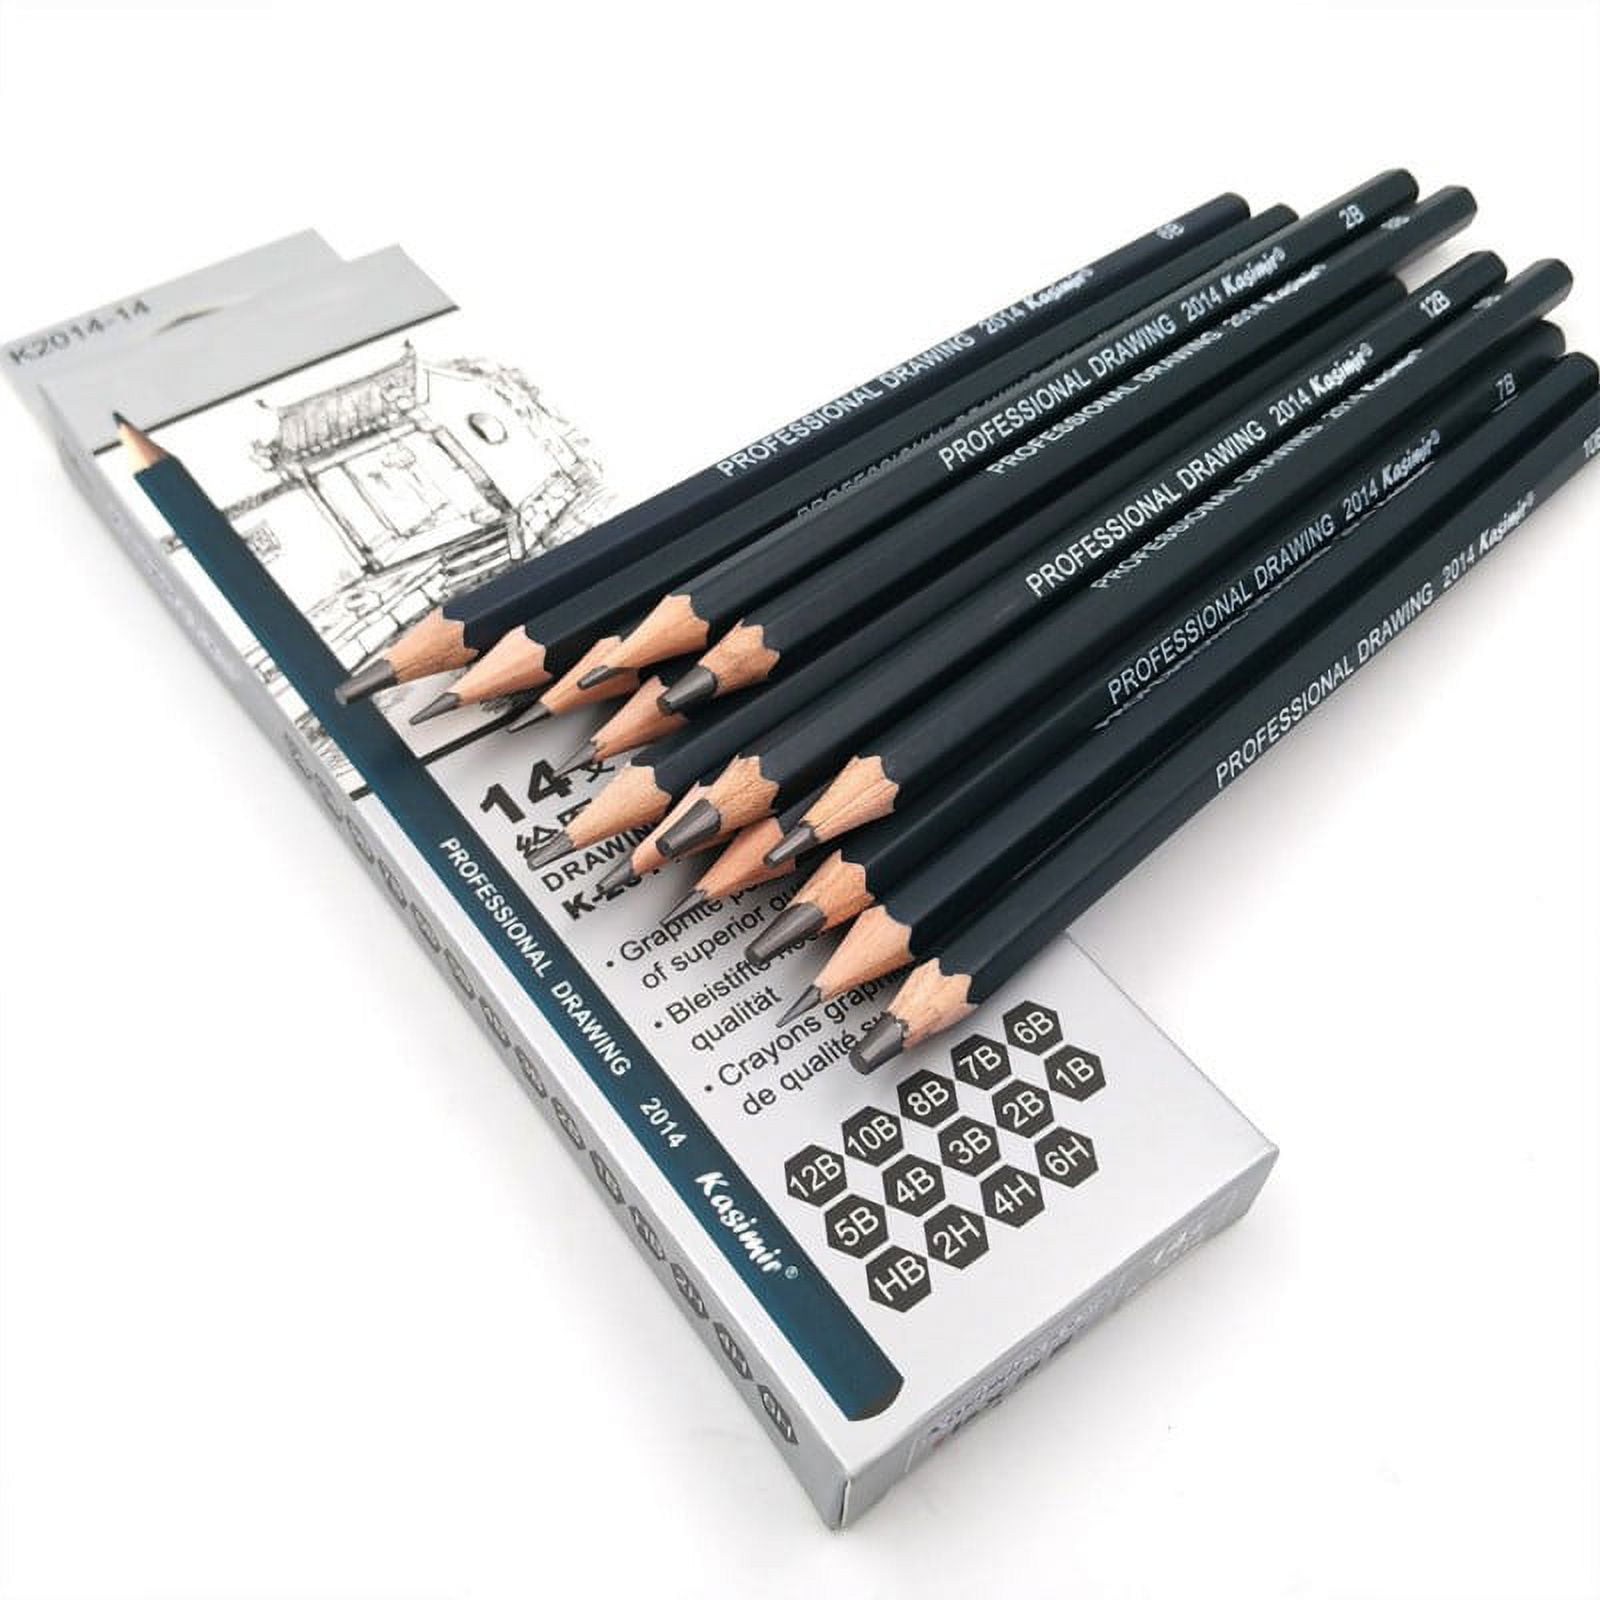 Wanshui 12 Drawing Pencils - Graphite Sketching Pencils Set HB, H, 2H, B,  2B, 3B, 4B, 6B, 8B, 10B, 12B, 14B Professional Art Sketch Pencils for